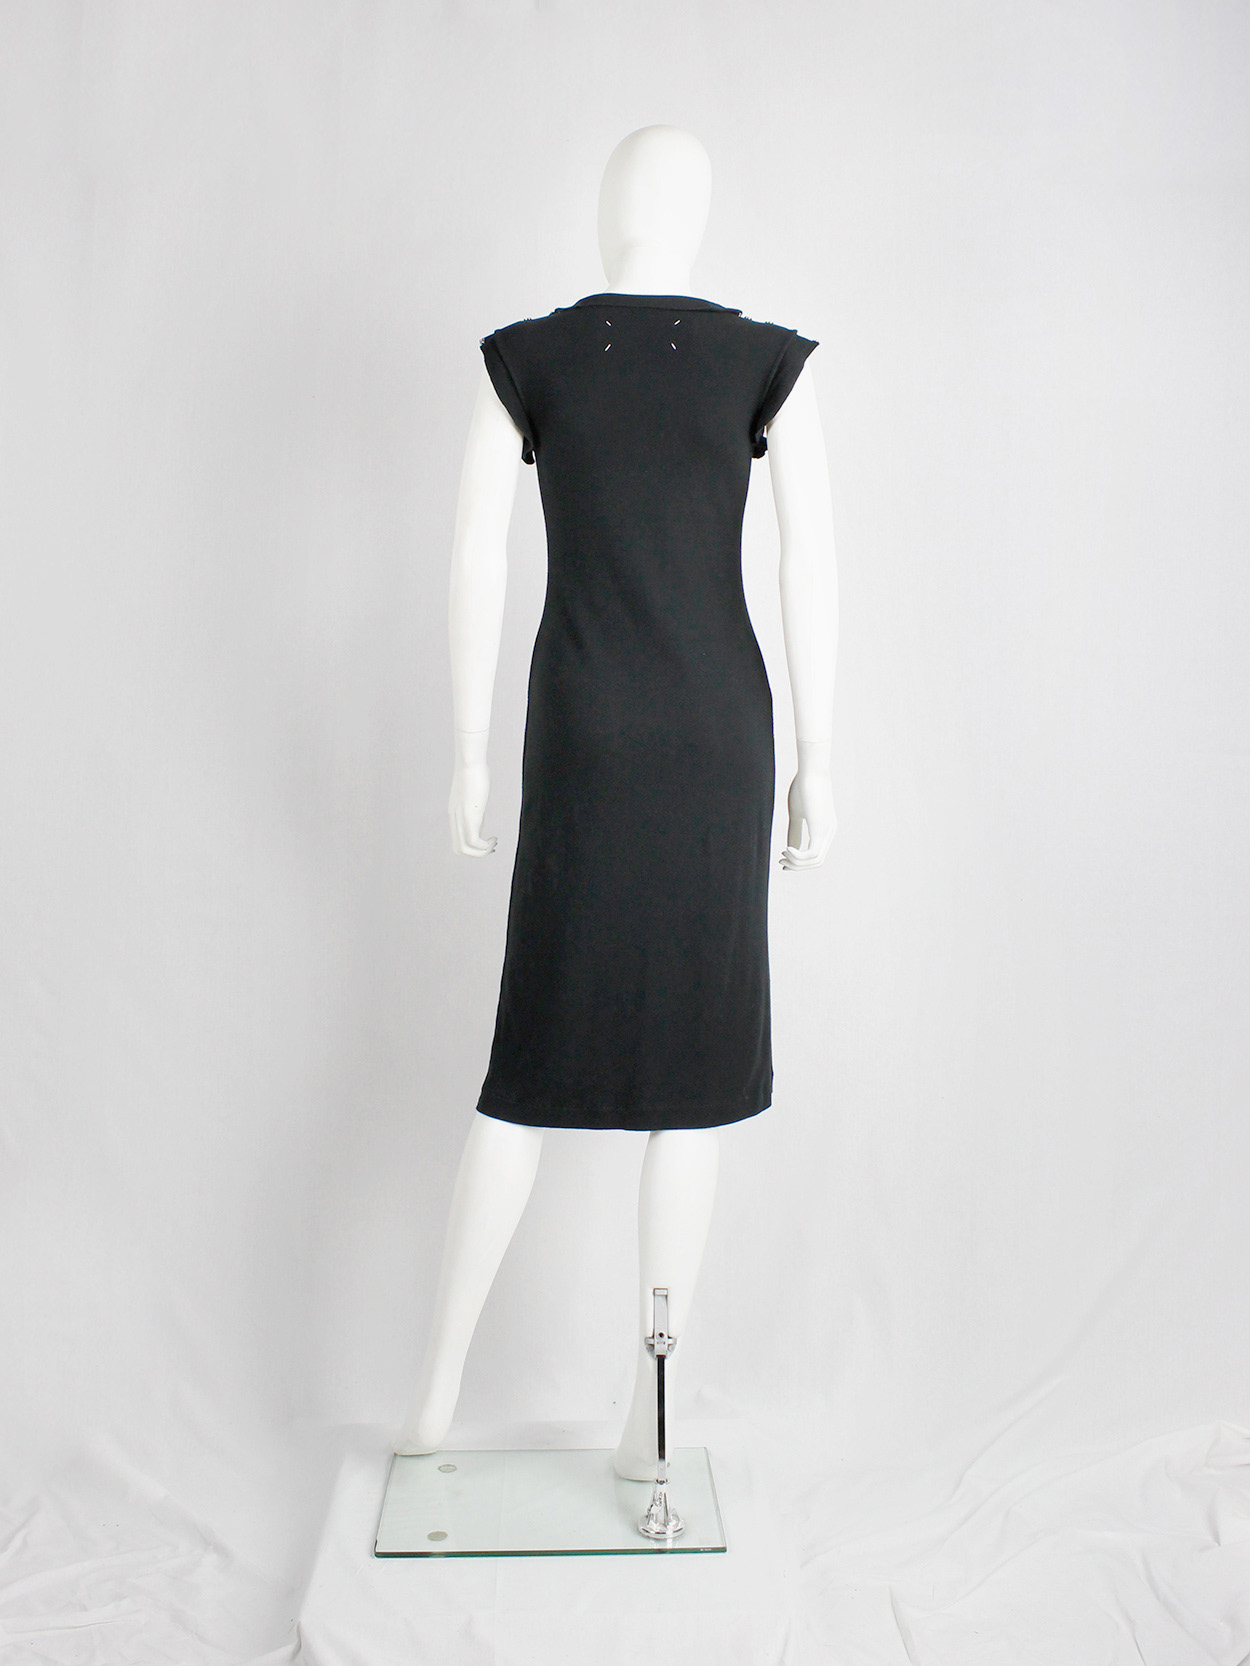 Maison Martin Margiela reproduction of a 1993 black dress with shoulder ...